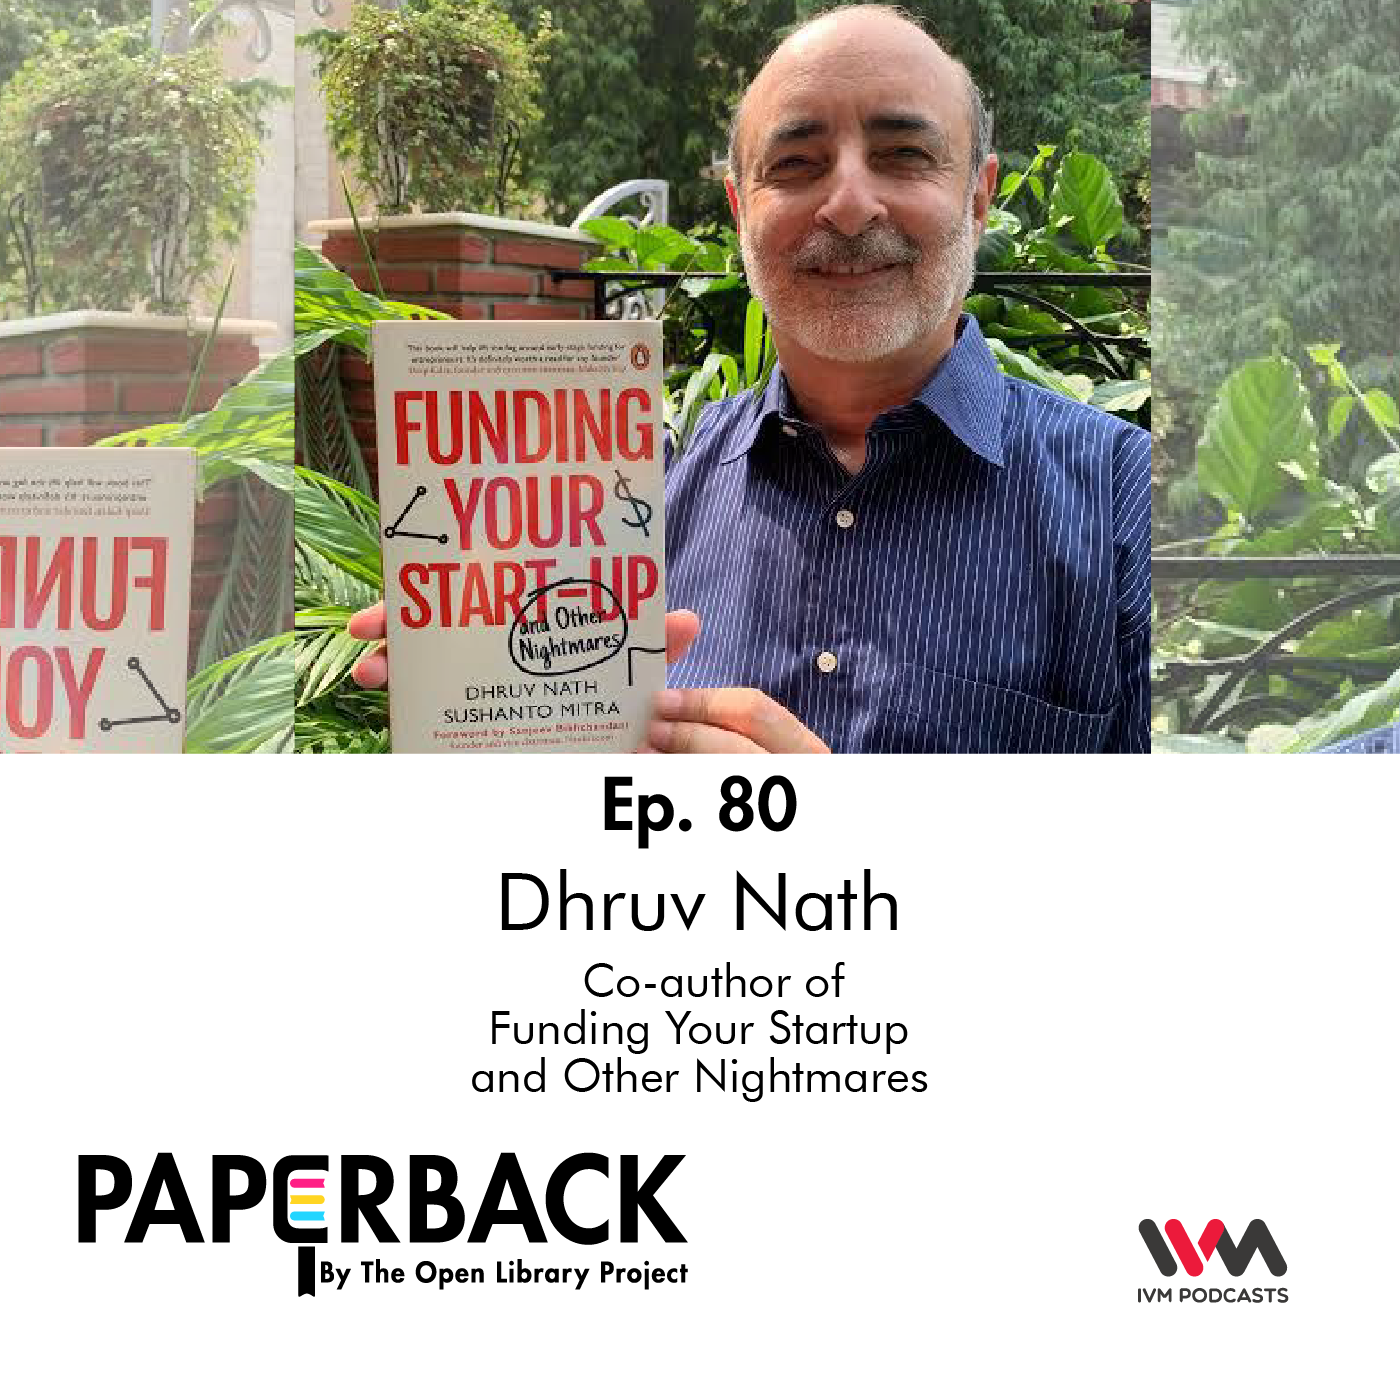 Ep. 80: Dhruv Nath